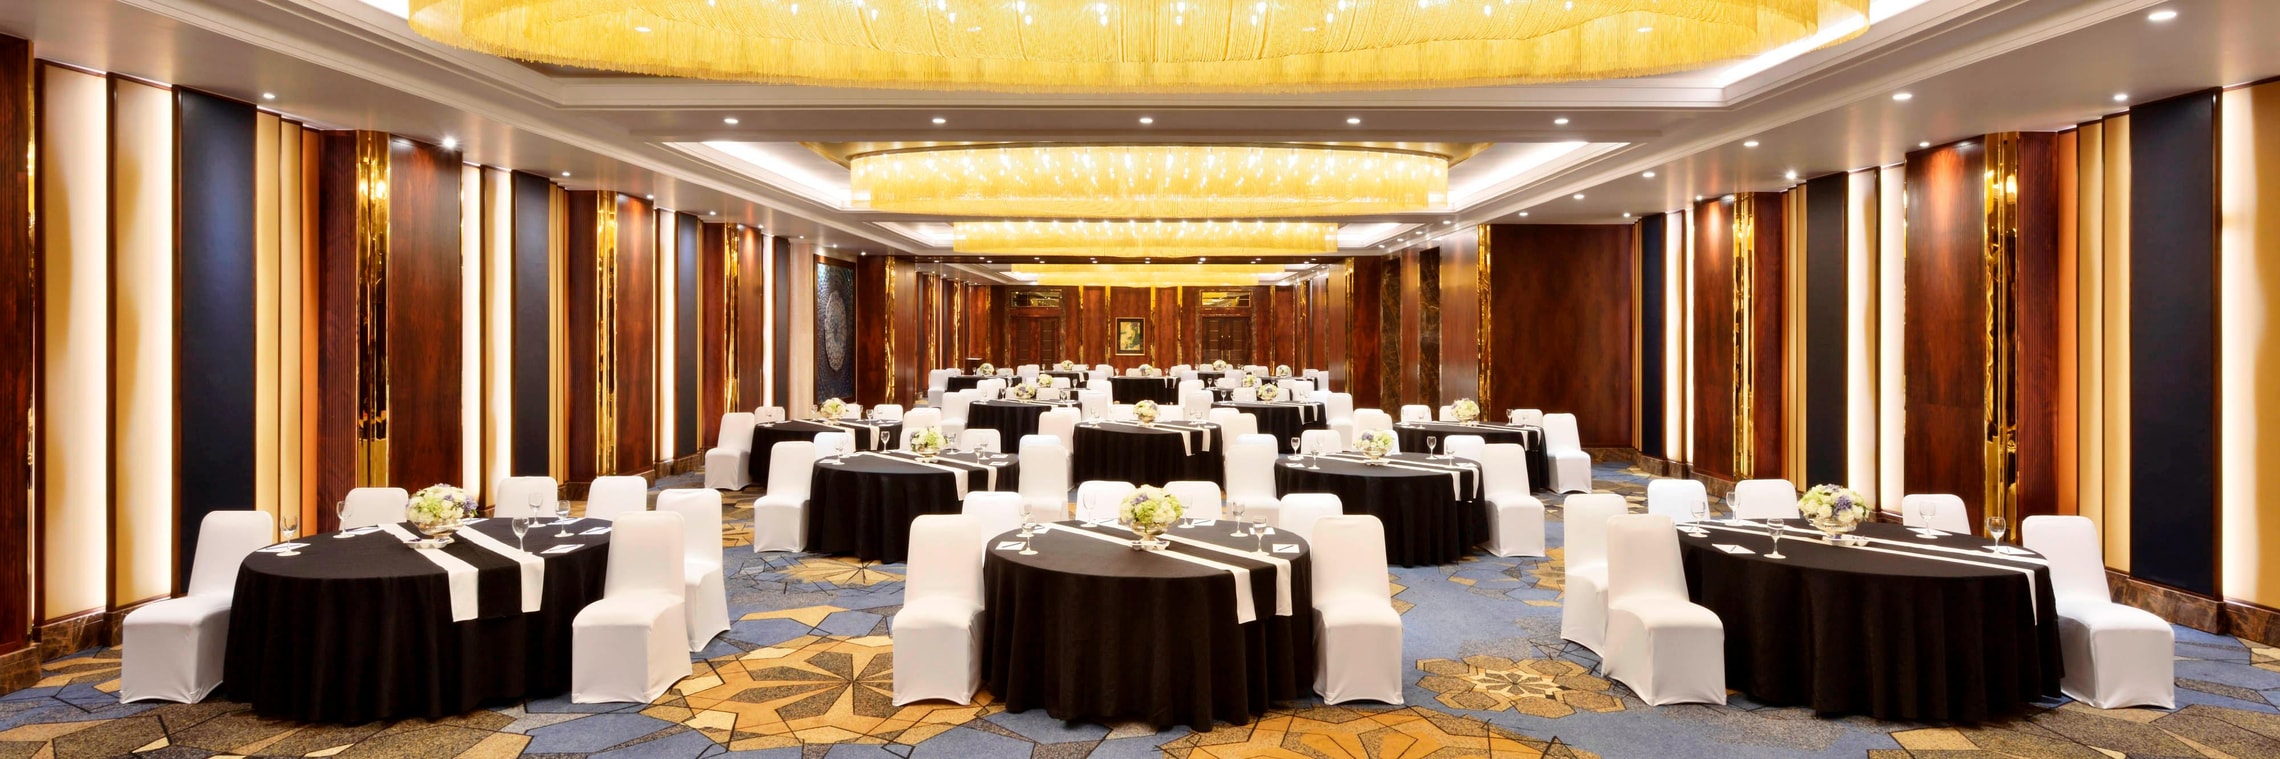 Majestic Ballroom - Banquet Set-Up